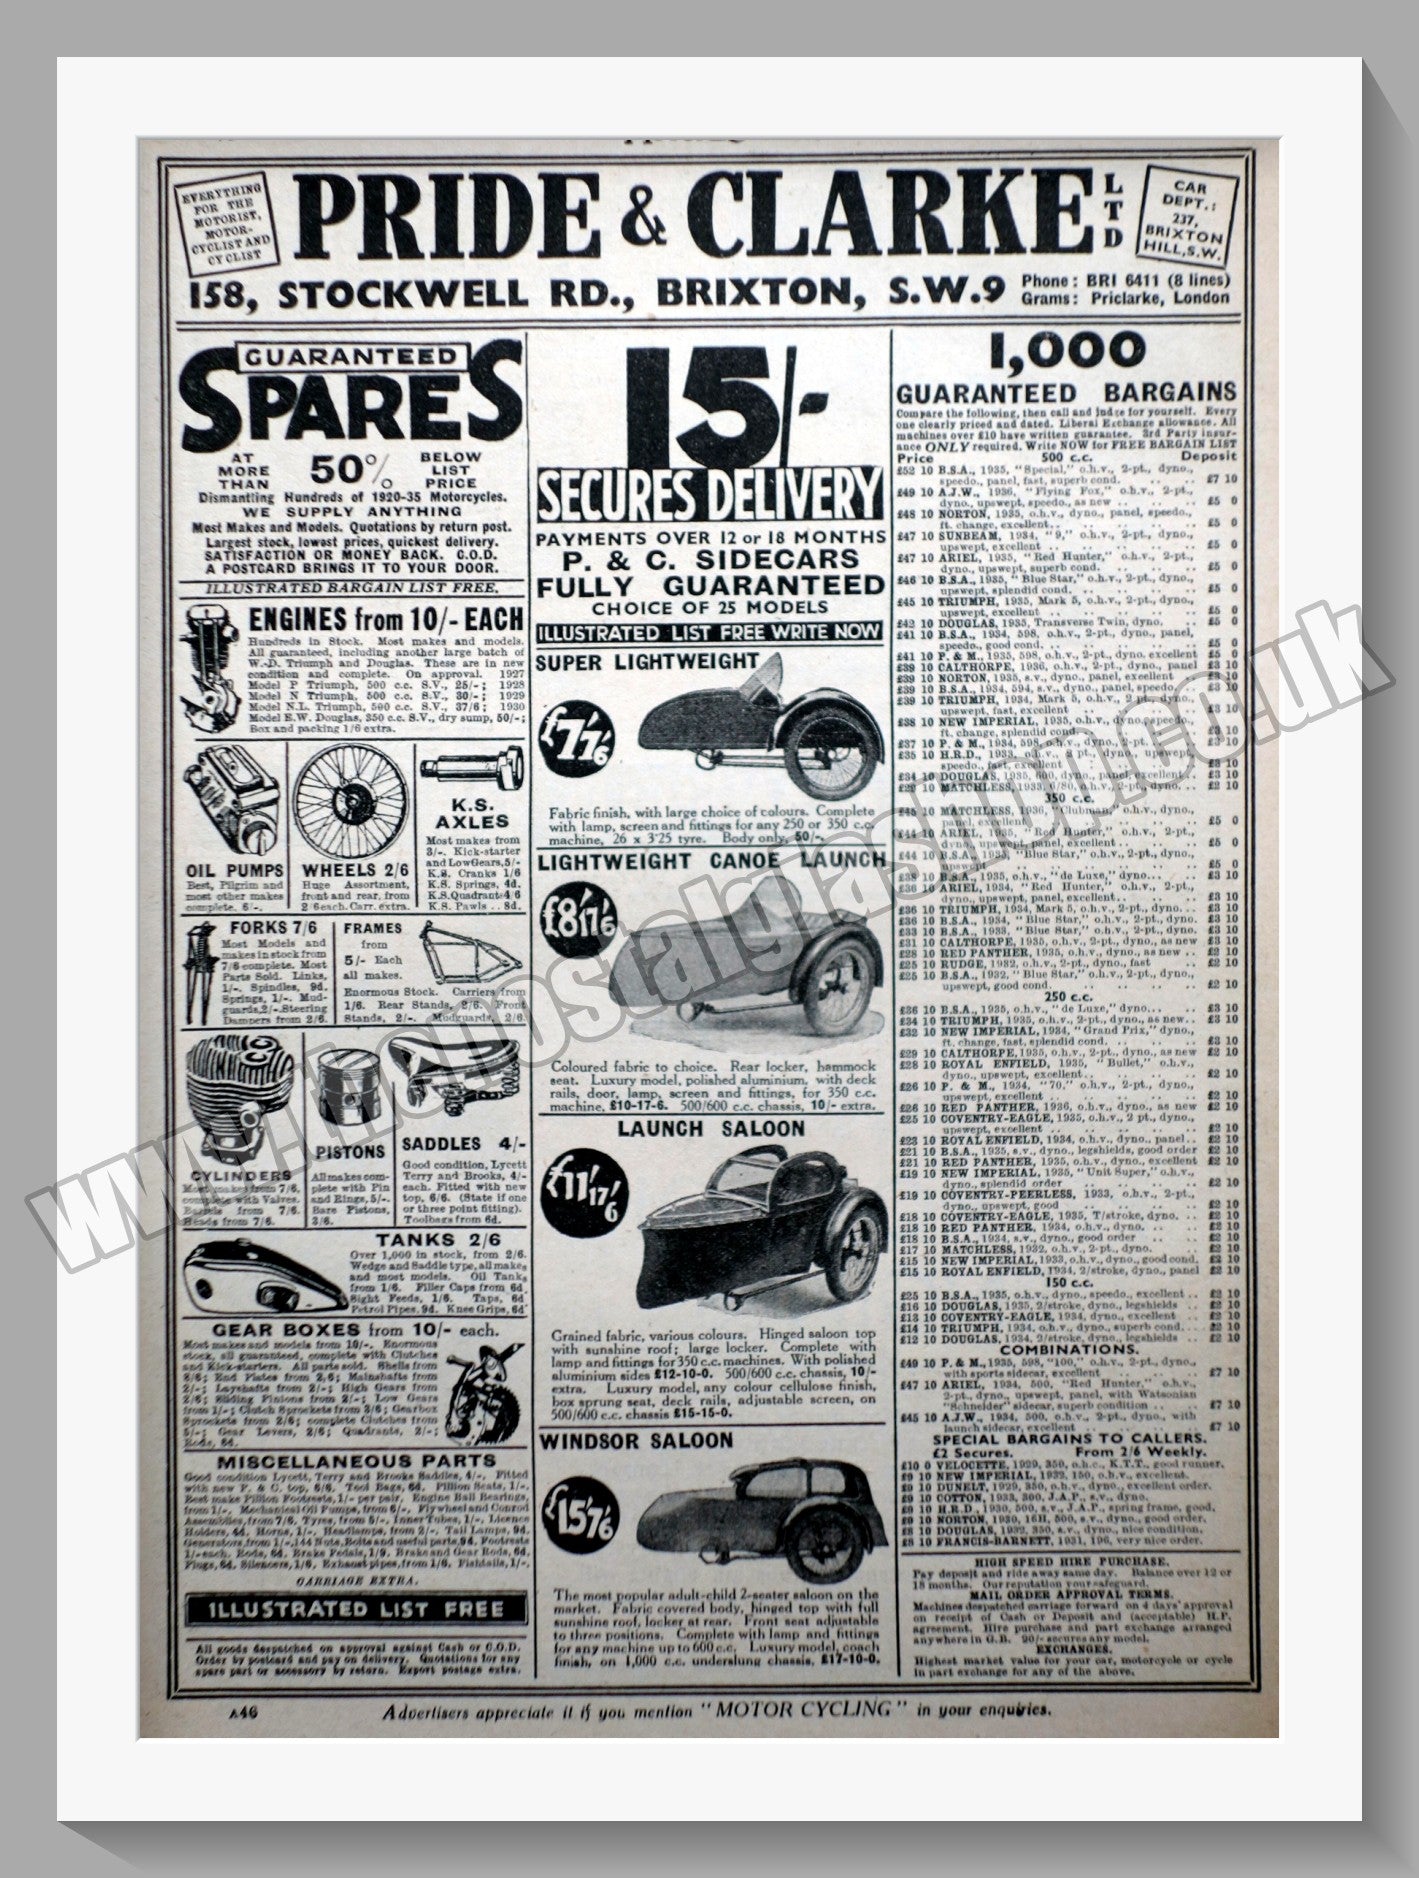 Pride & Clarke Ltd Motorcycle Dealer. Original Advert 1936 (ref AD57564)